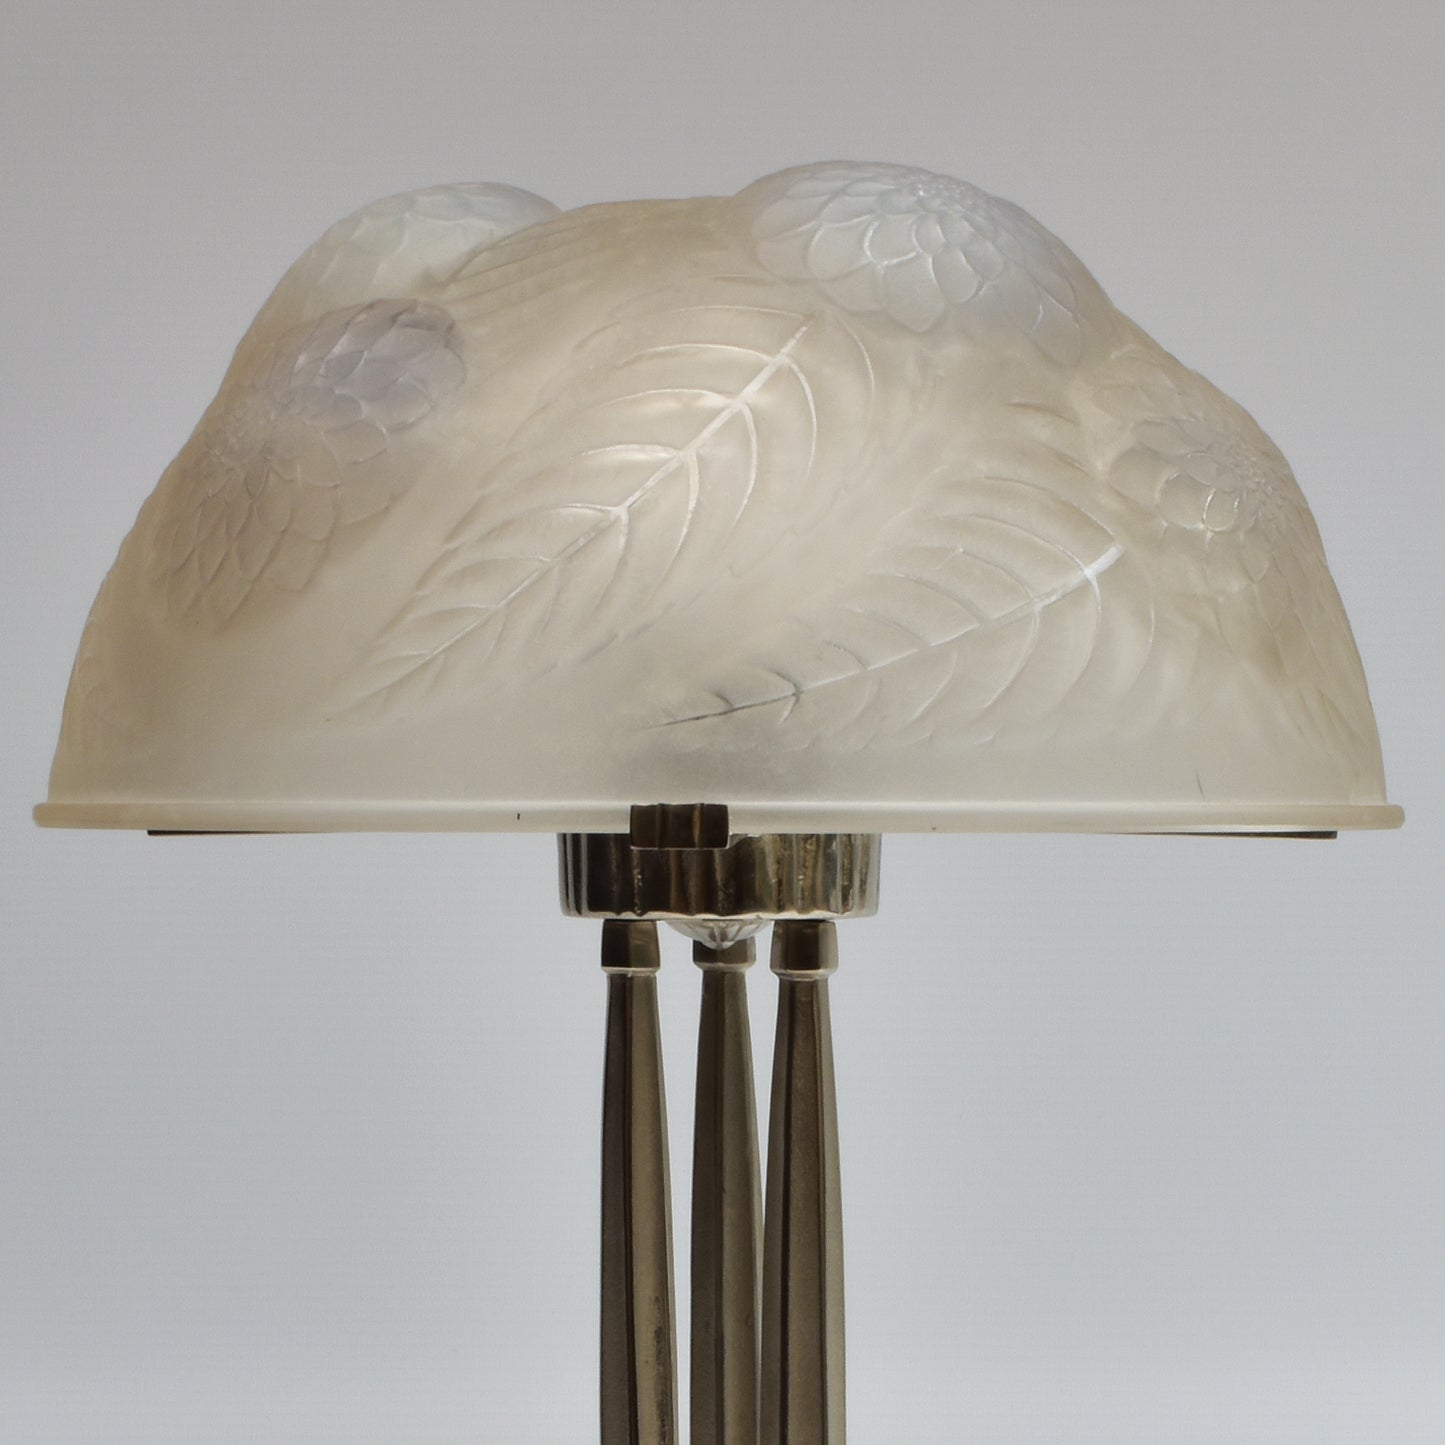 Dahlia lamp